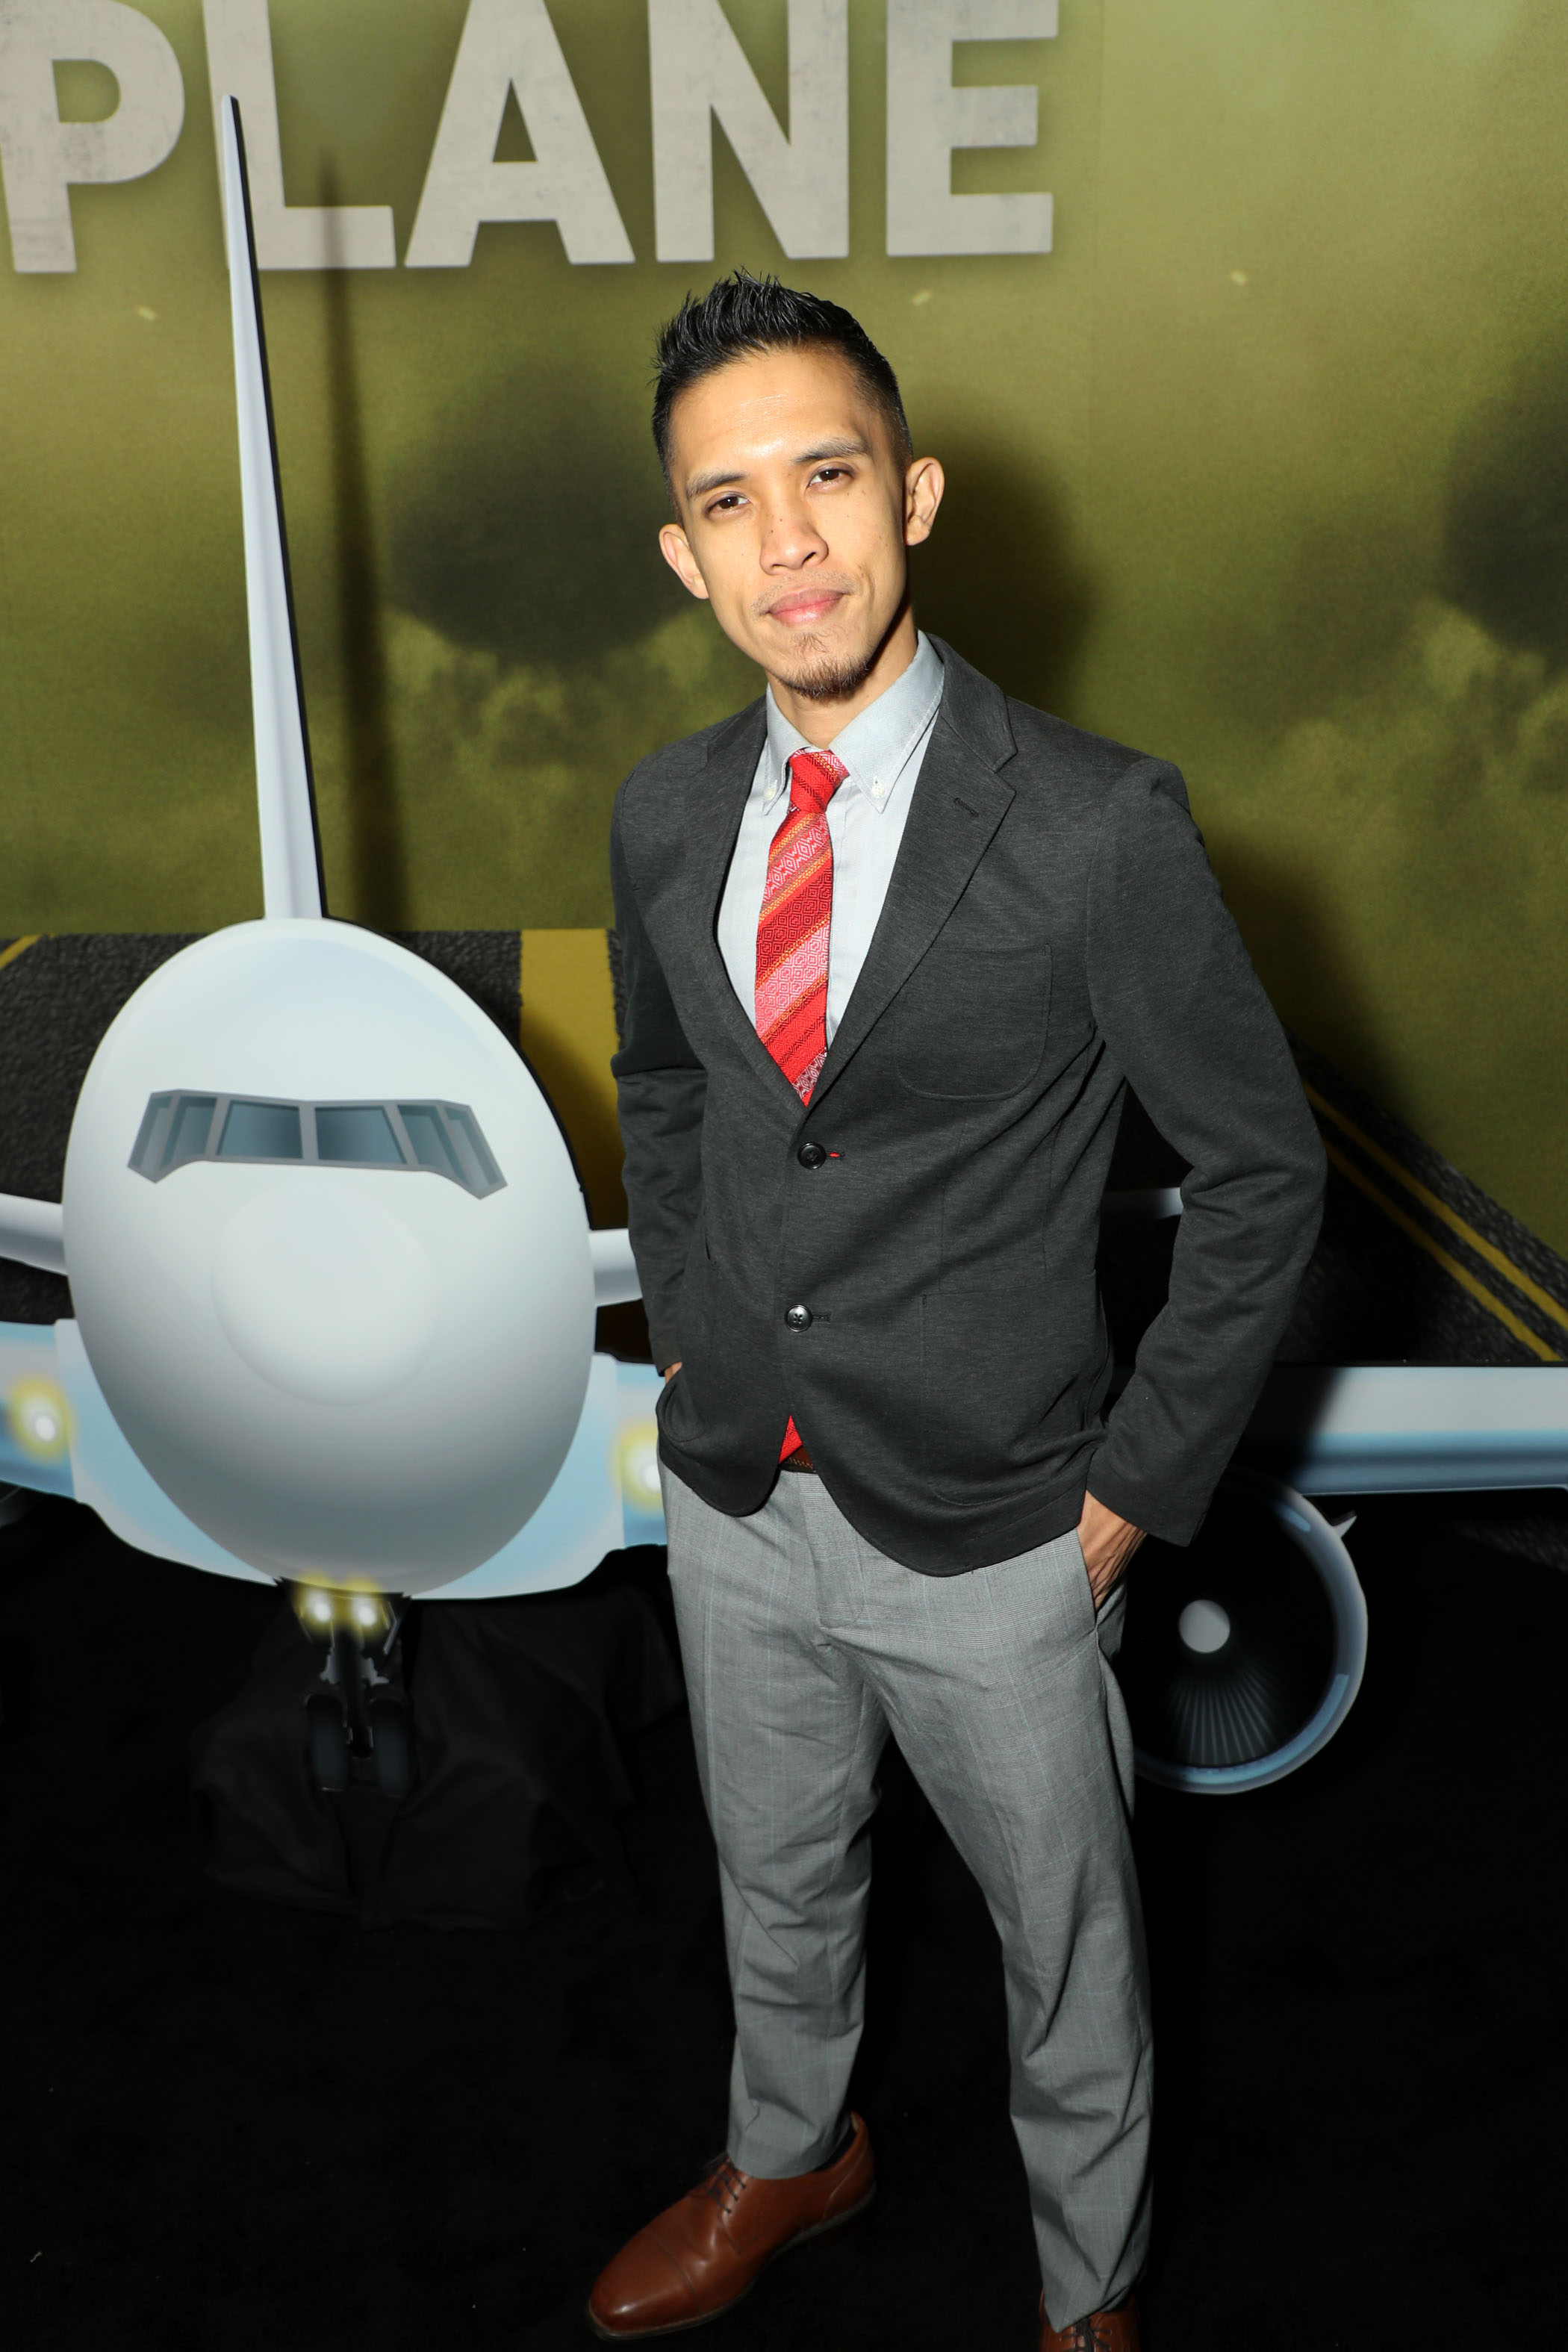 Claro de los Reyes at the Plane premiere. Photo credit: Lionsgate